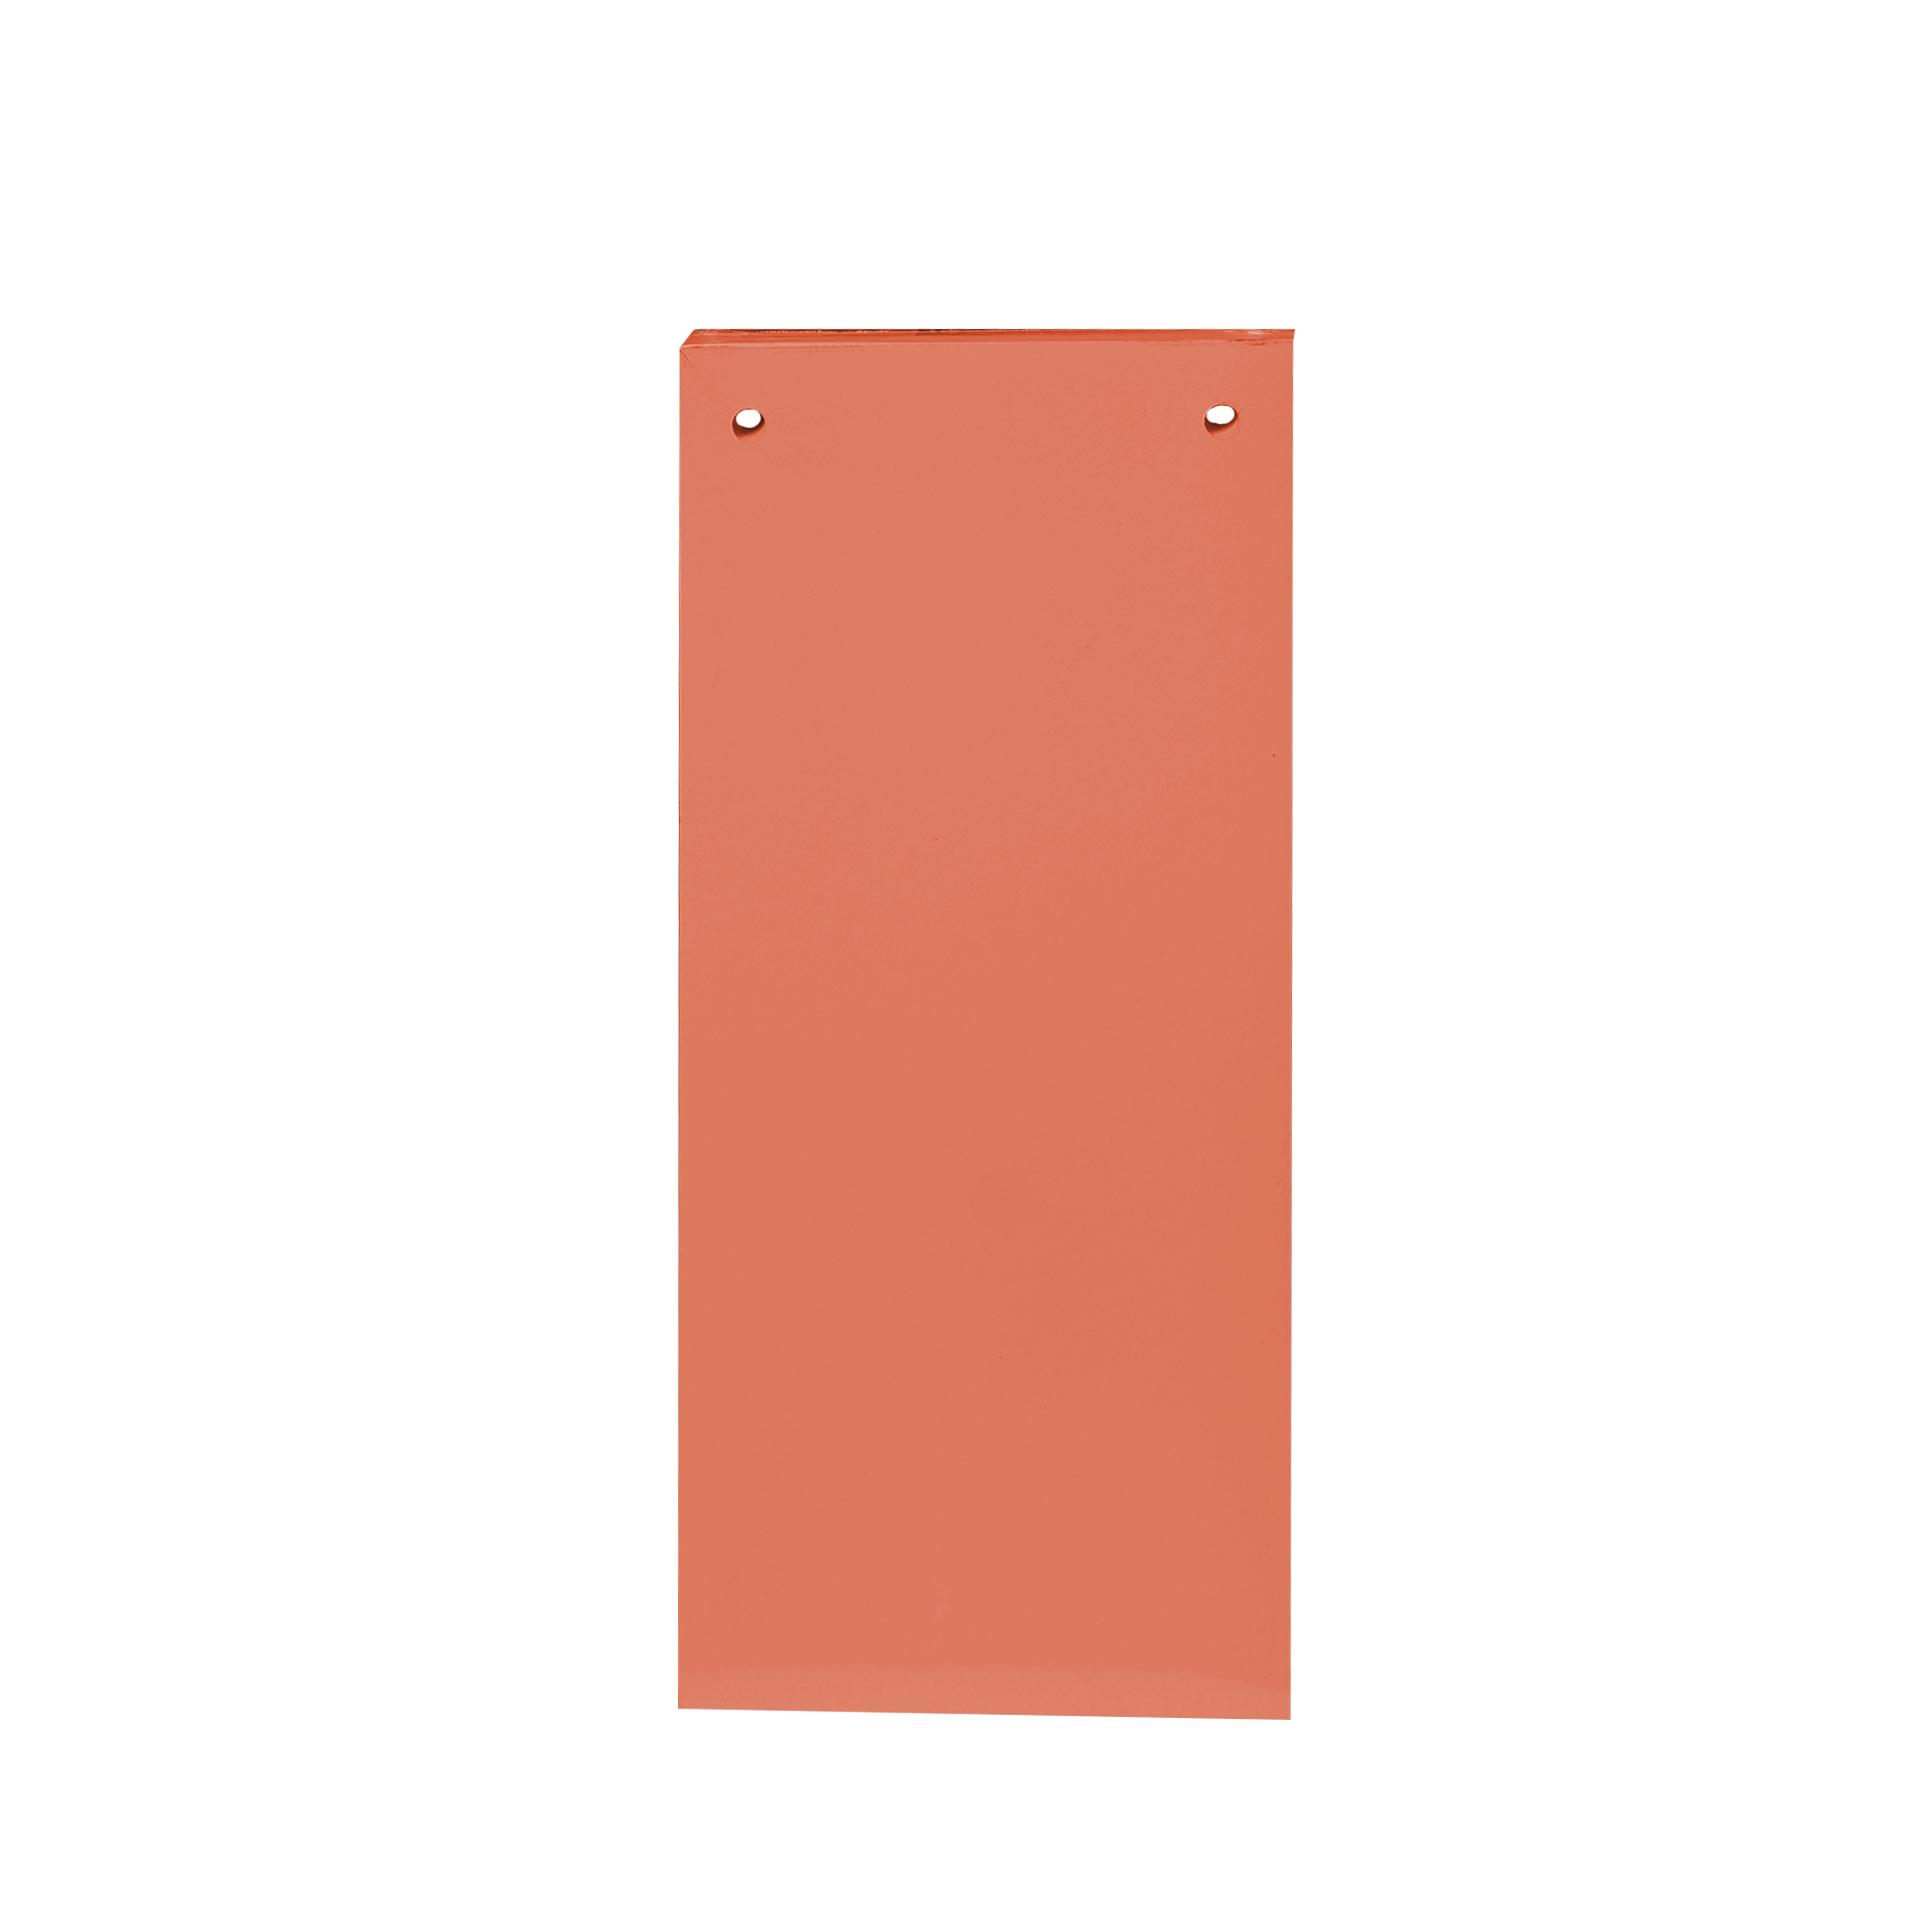 Fabriano Разделител, хоризонтален, картонен, 160 g/m2, цвят портокал, 100 броя